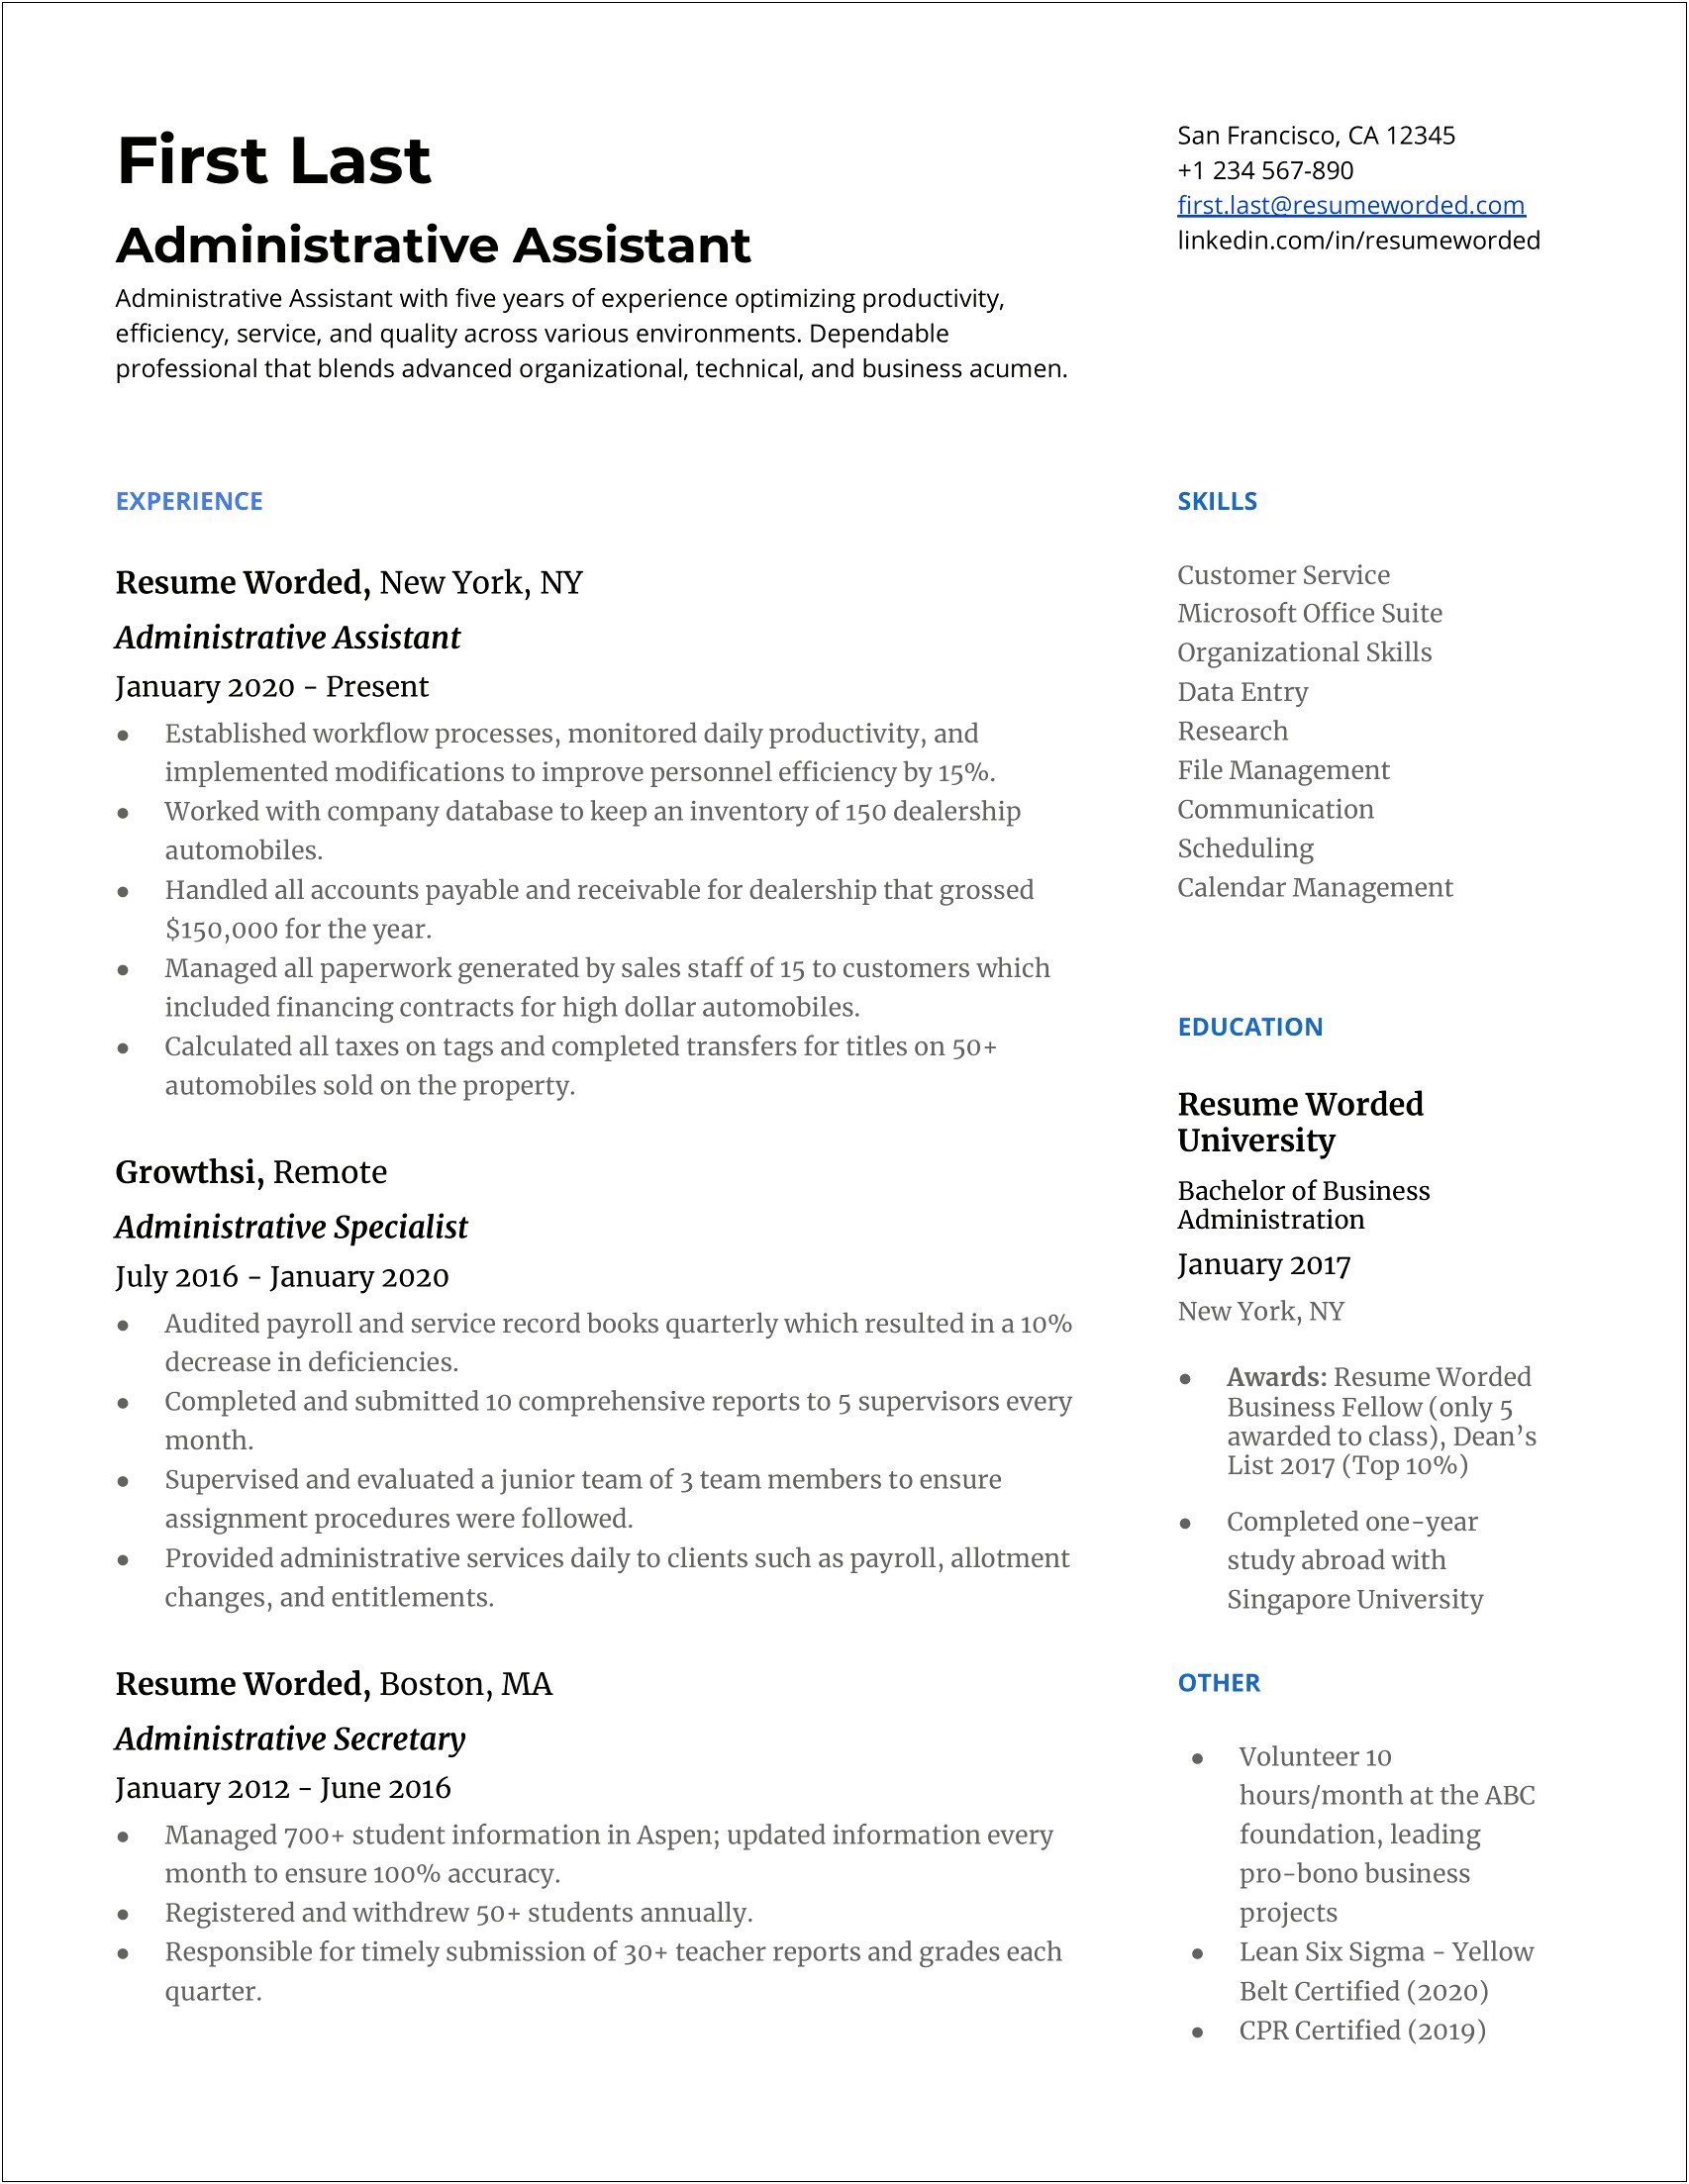 Best Sample Resume For Administrative Assistant